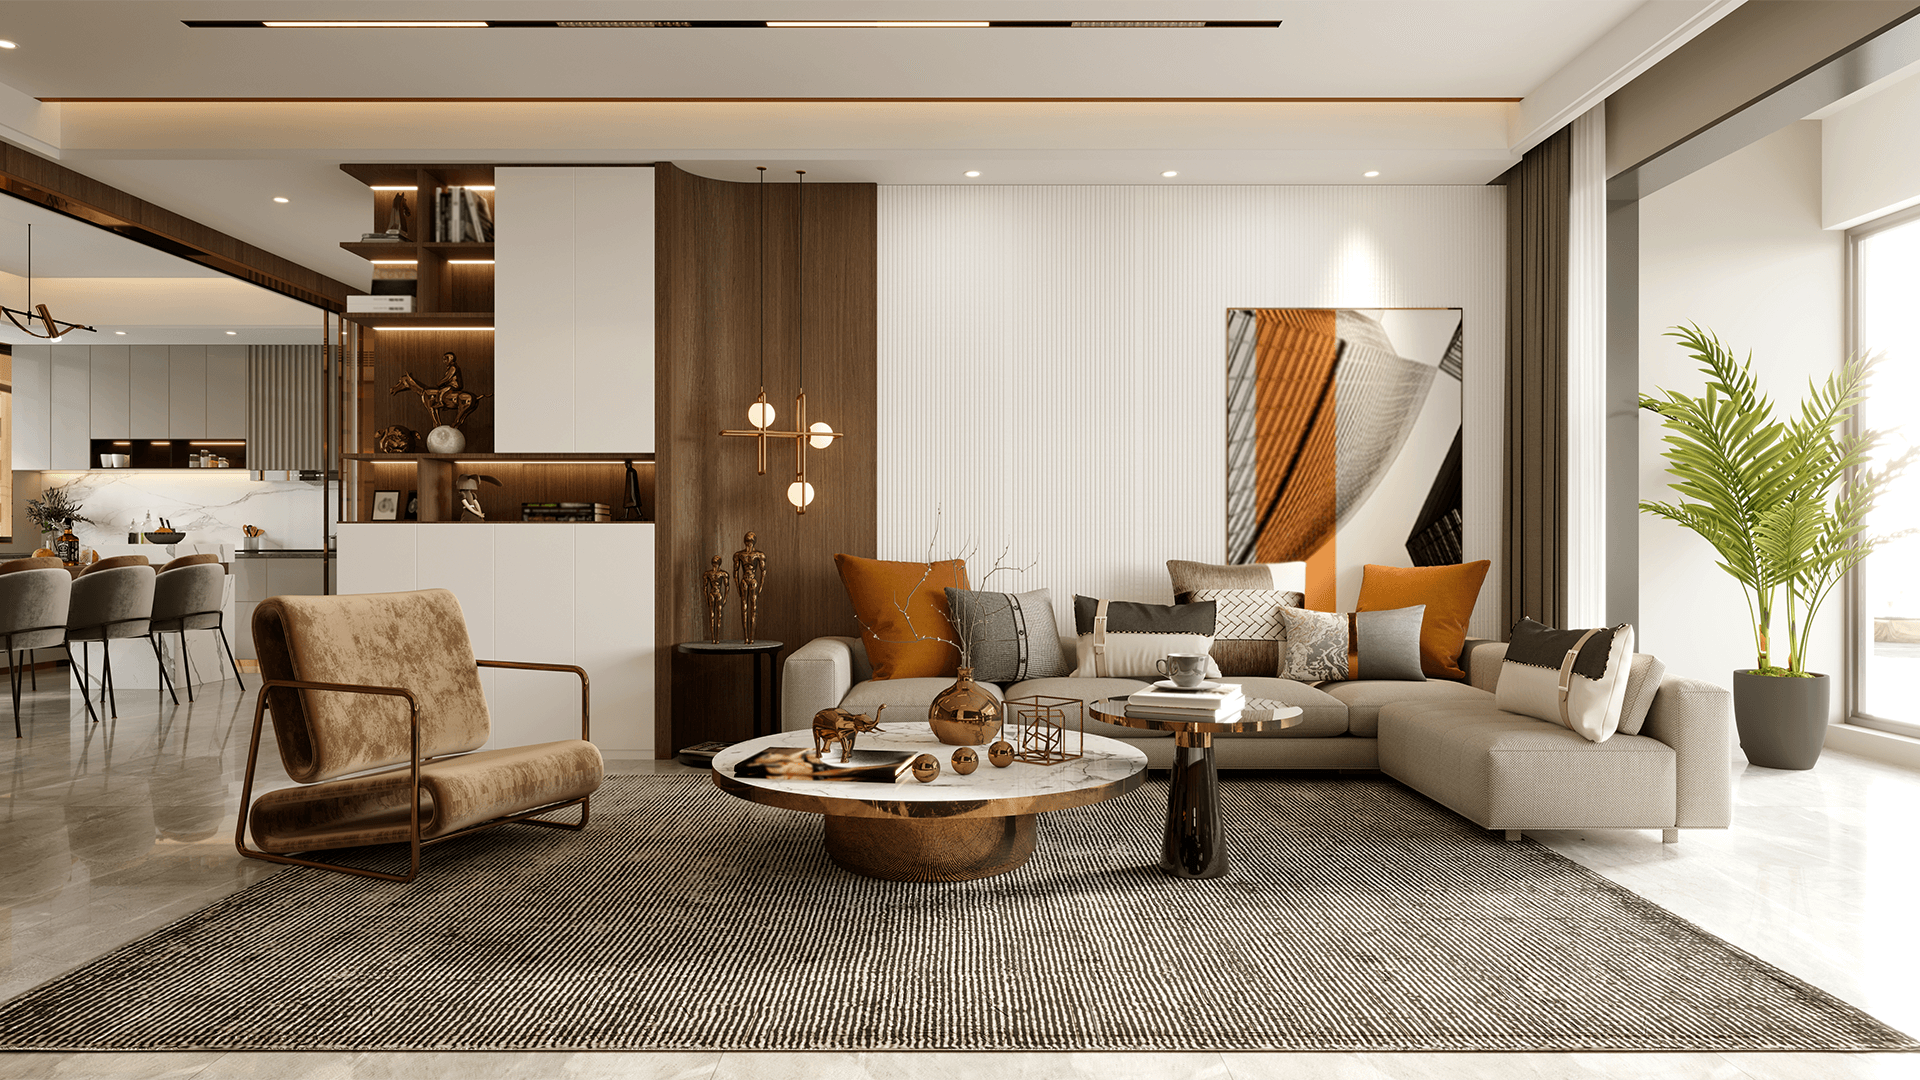 luxury home interior, living room